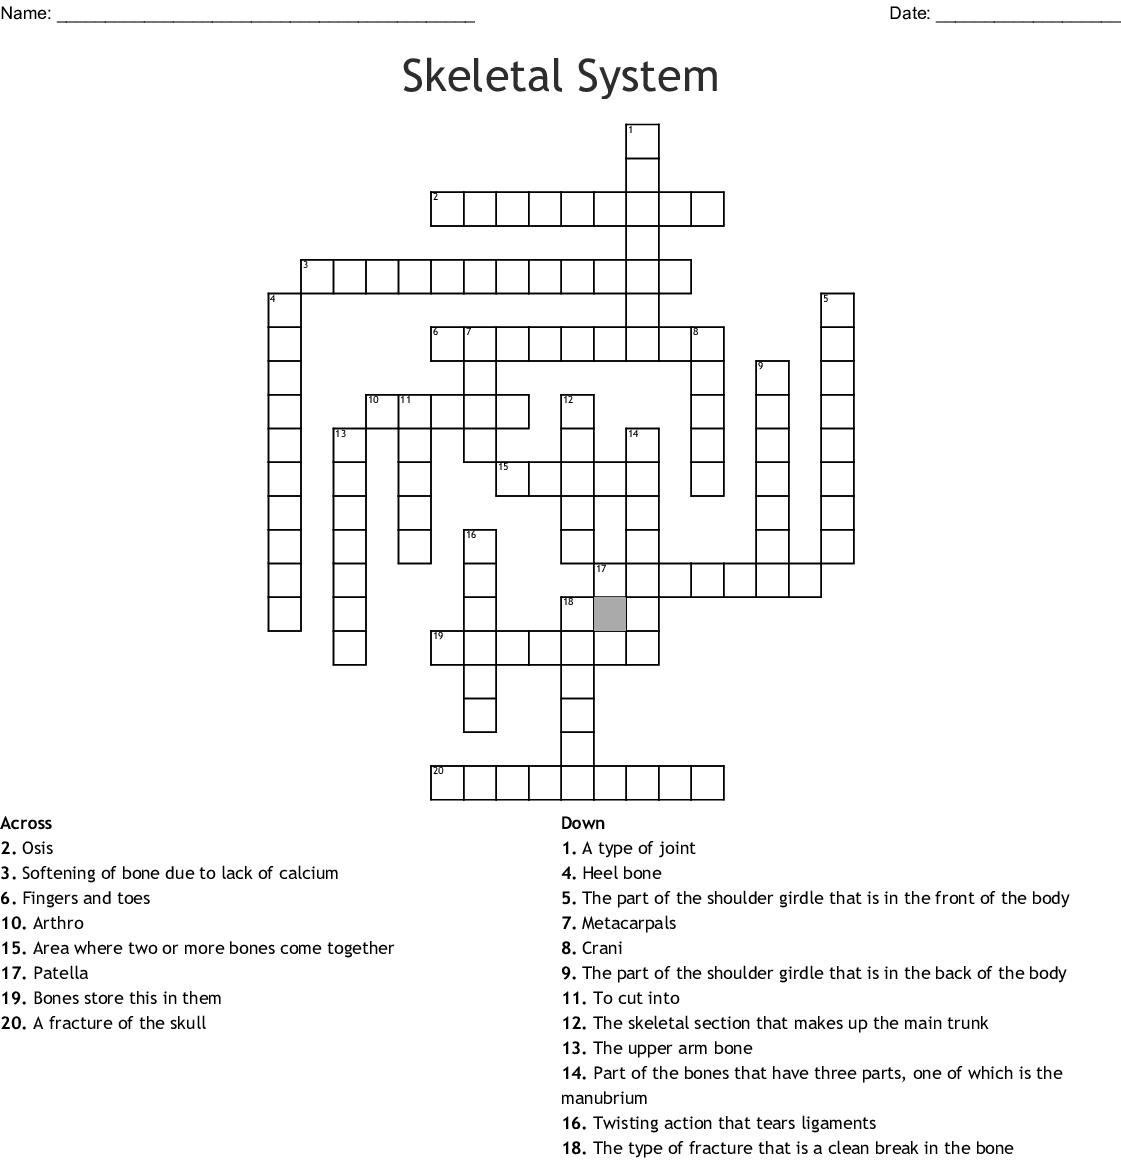 Skeletal System Crossword - Wordmint - Skeletal System Crossword Puzzle Printables